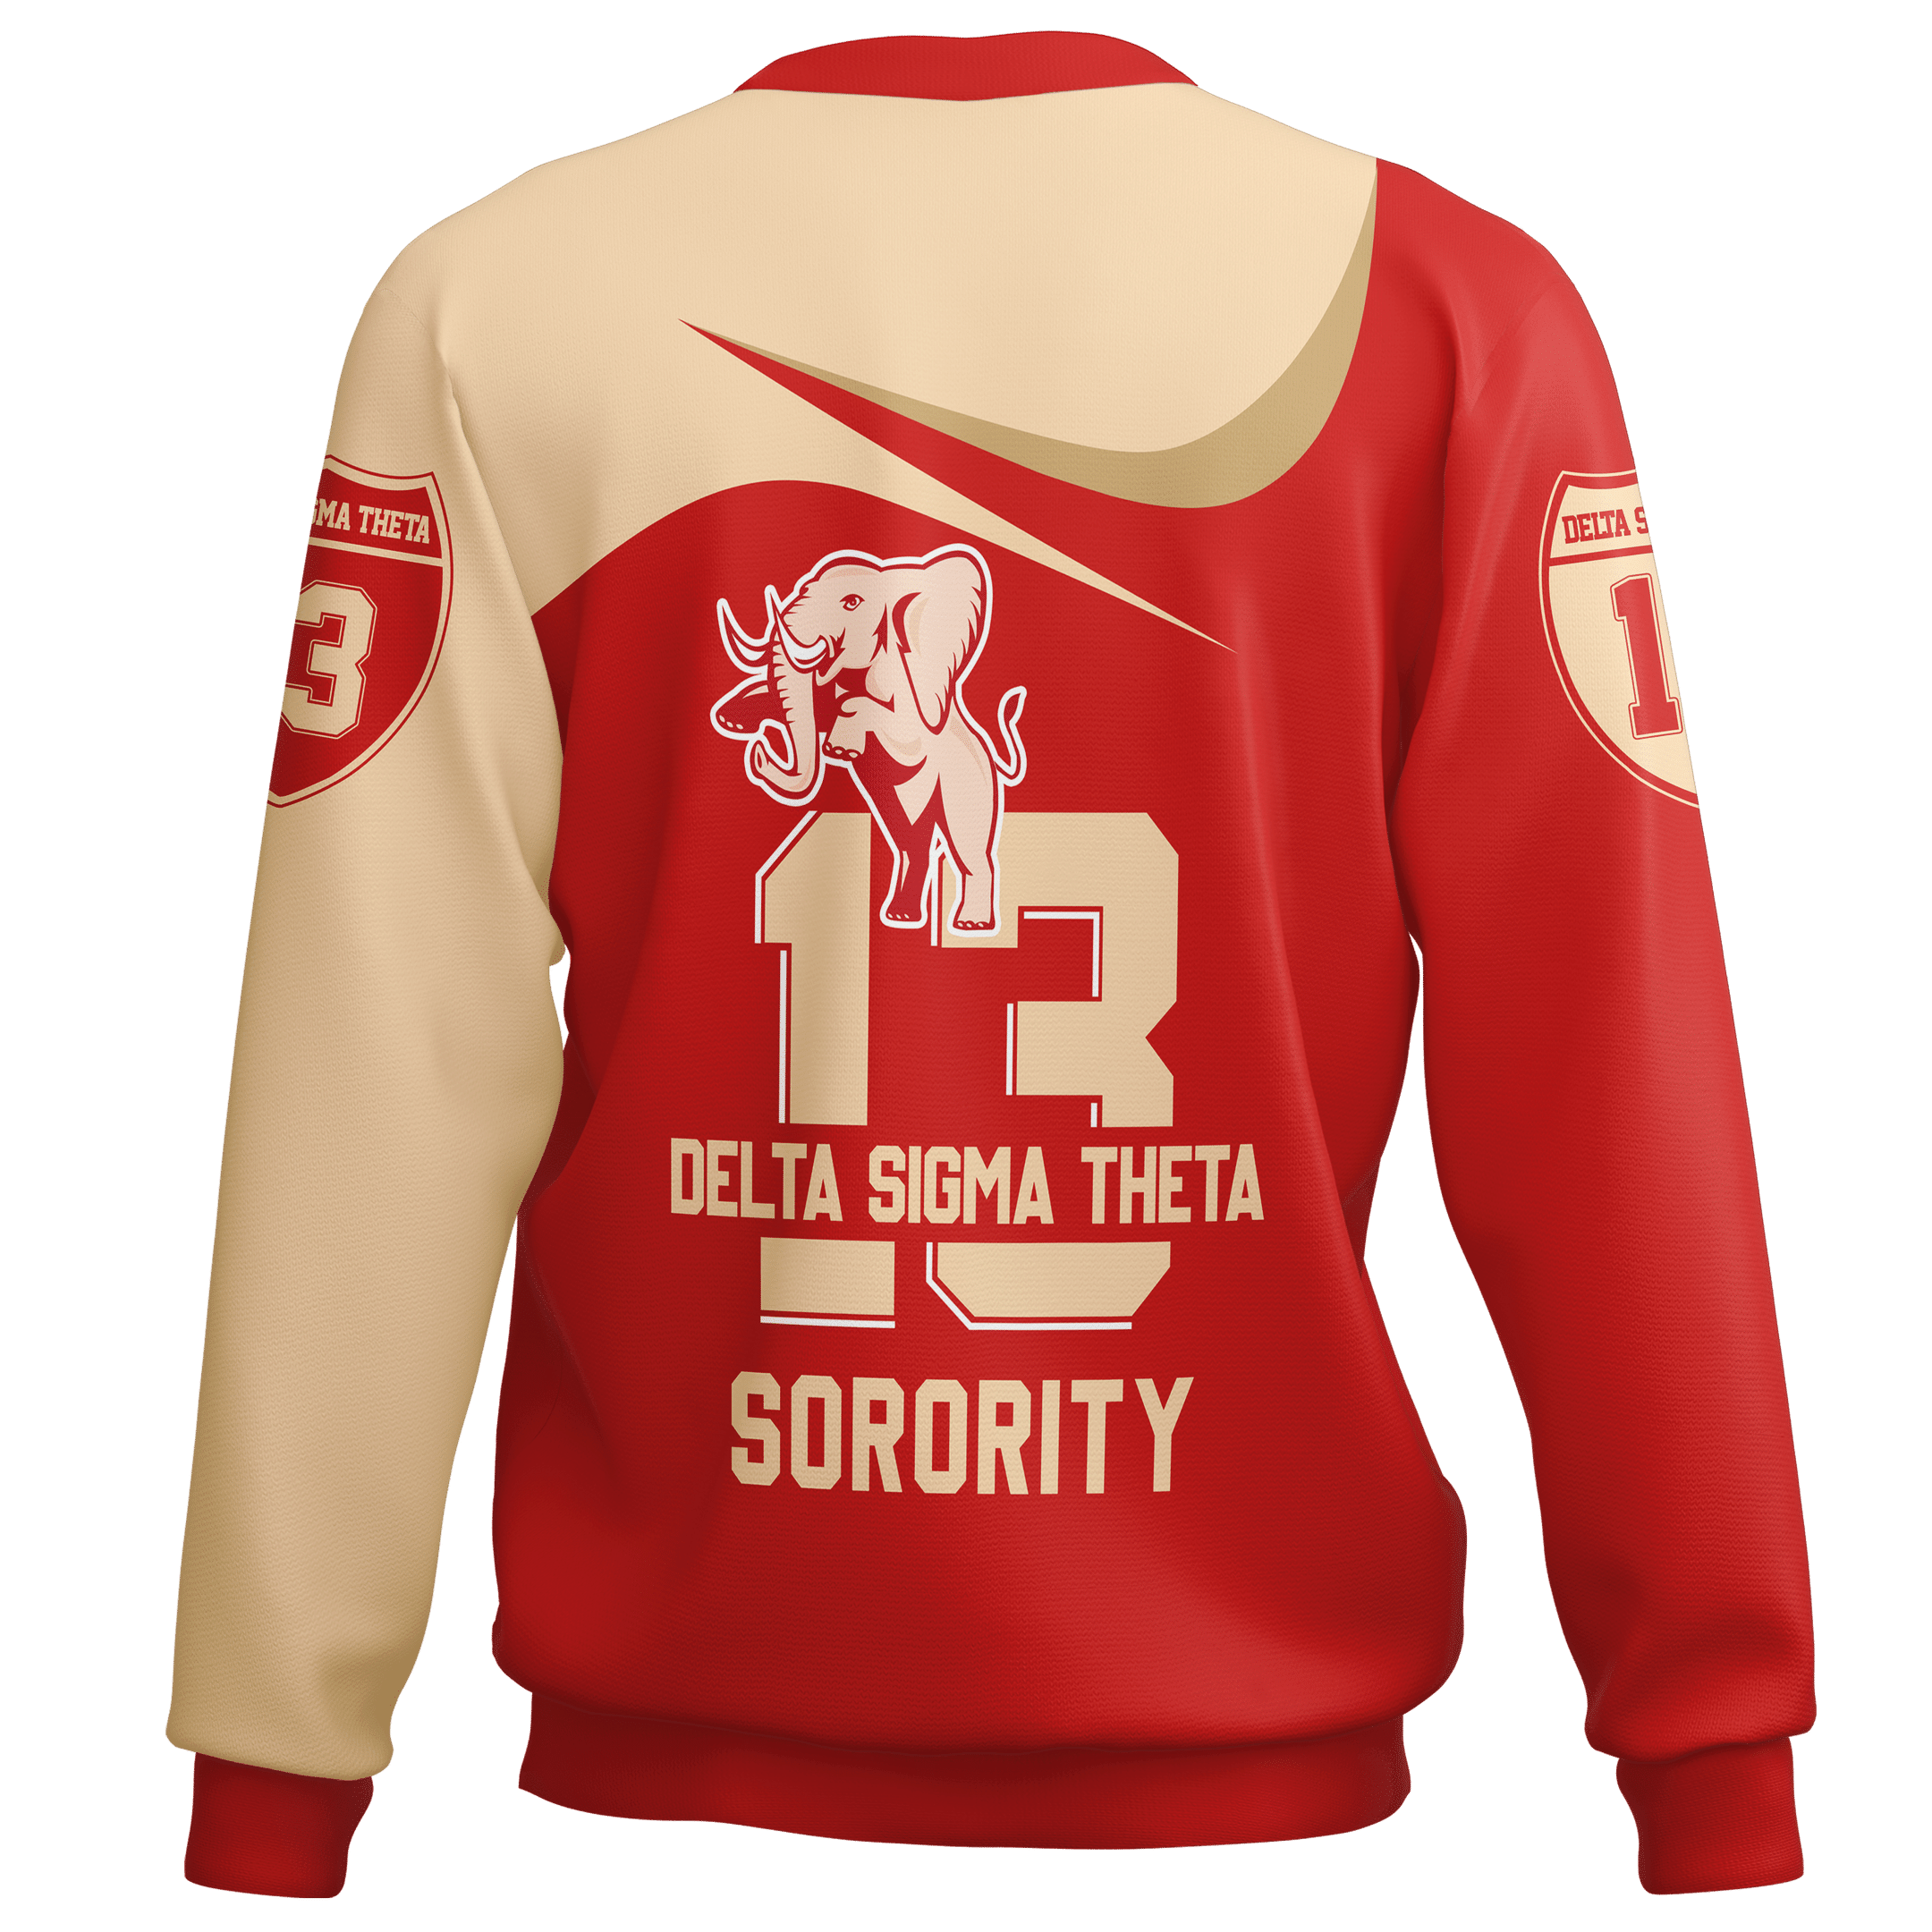 Sorority Sweatshirt - Delta Sigma Theta Curve Style Sweatshirt